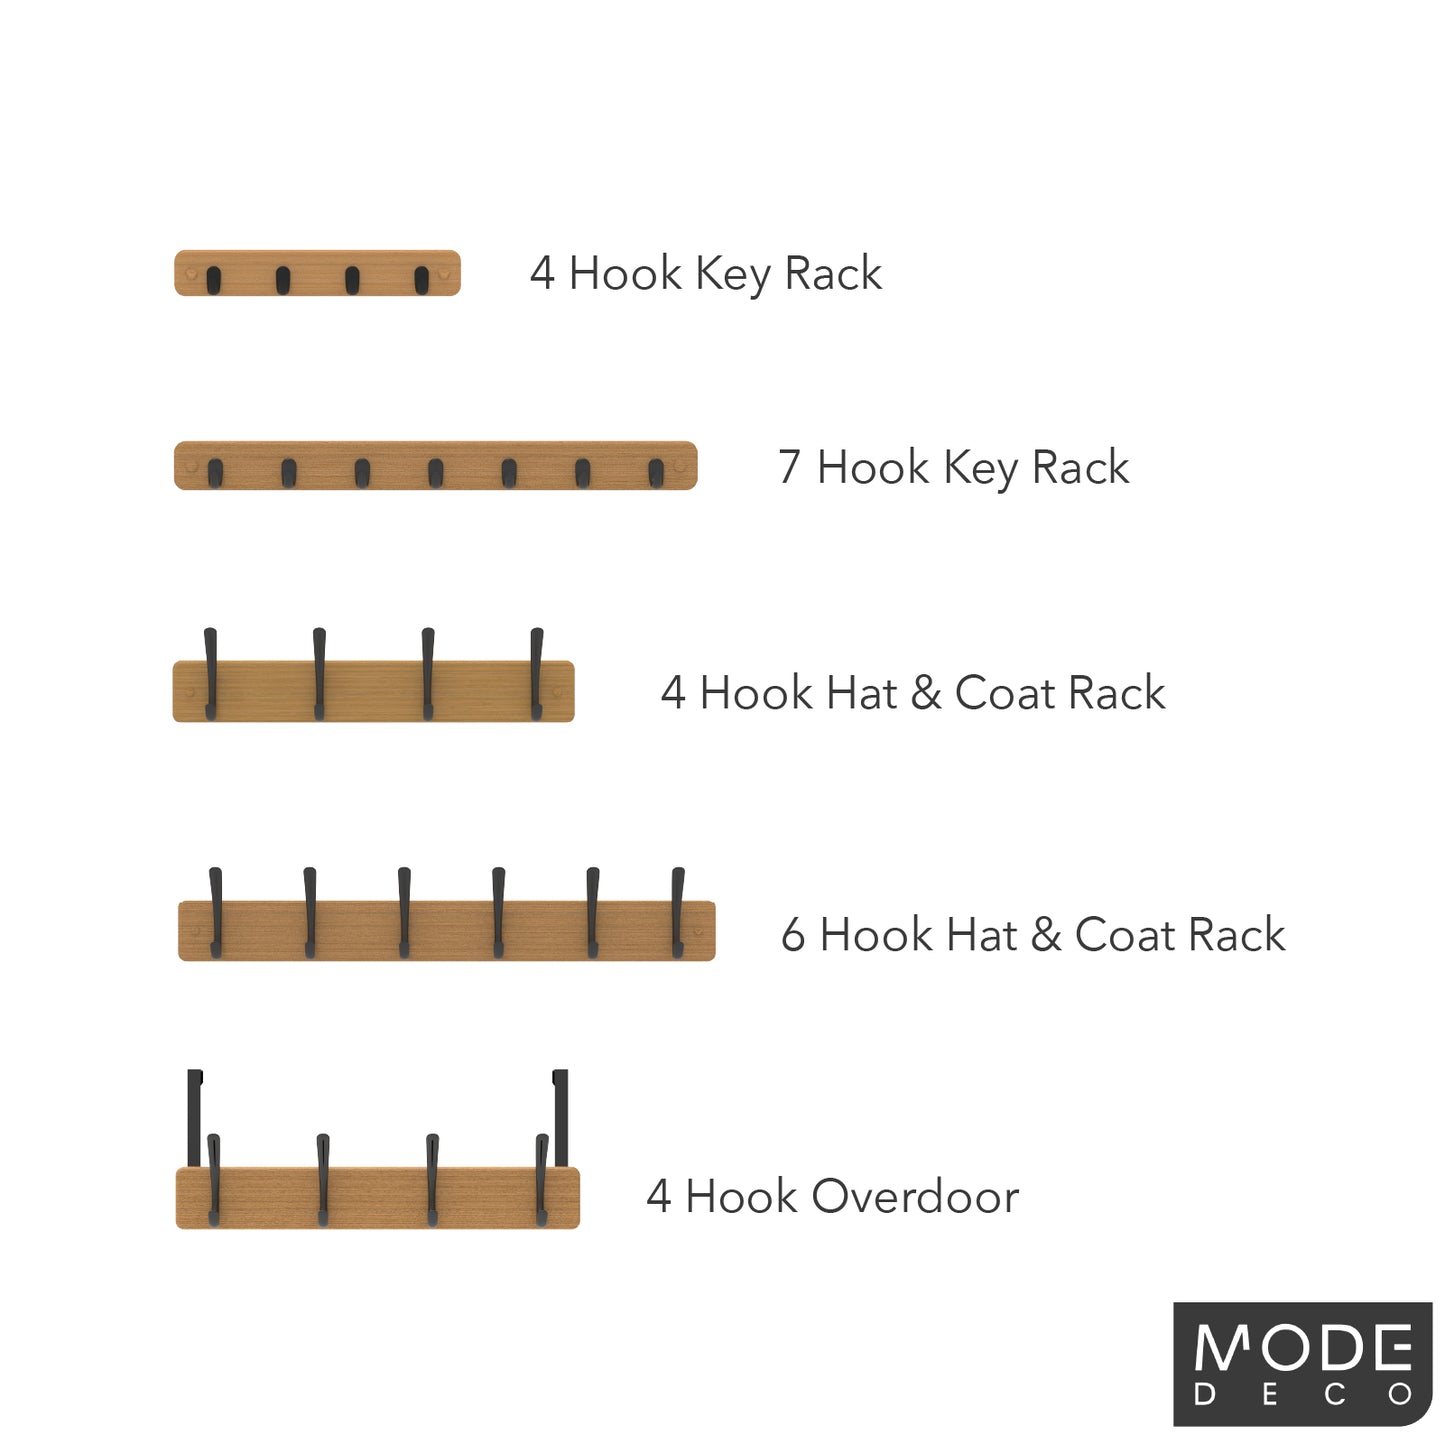 6 Black Hooks on Bamboo Board Hat & Coat Rack